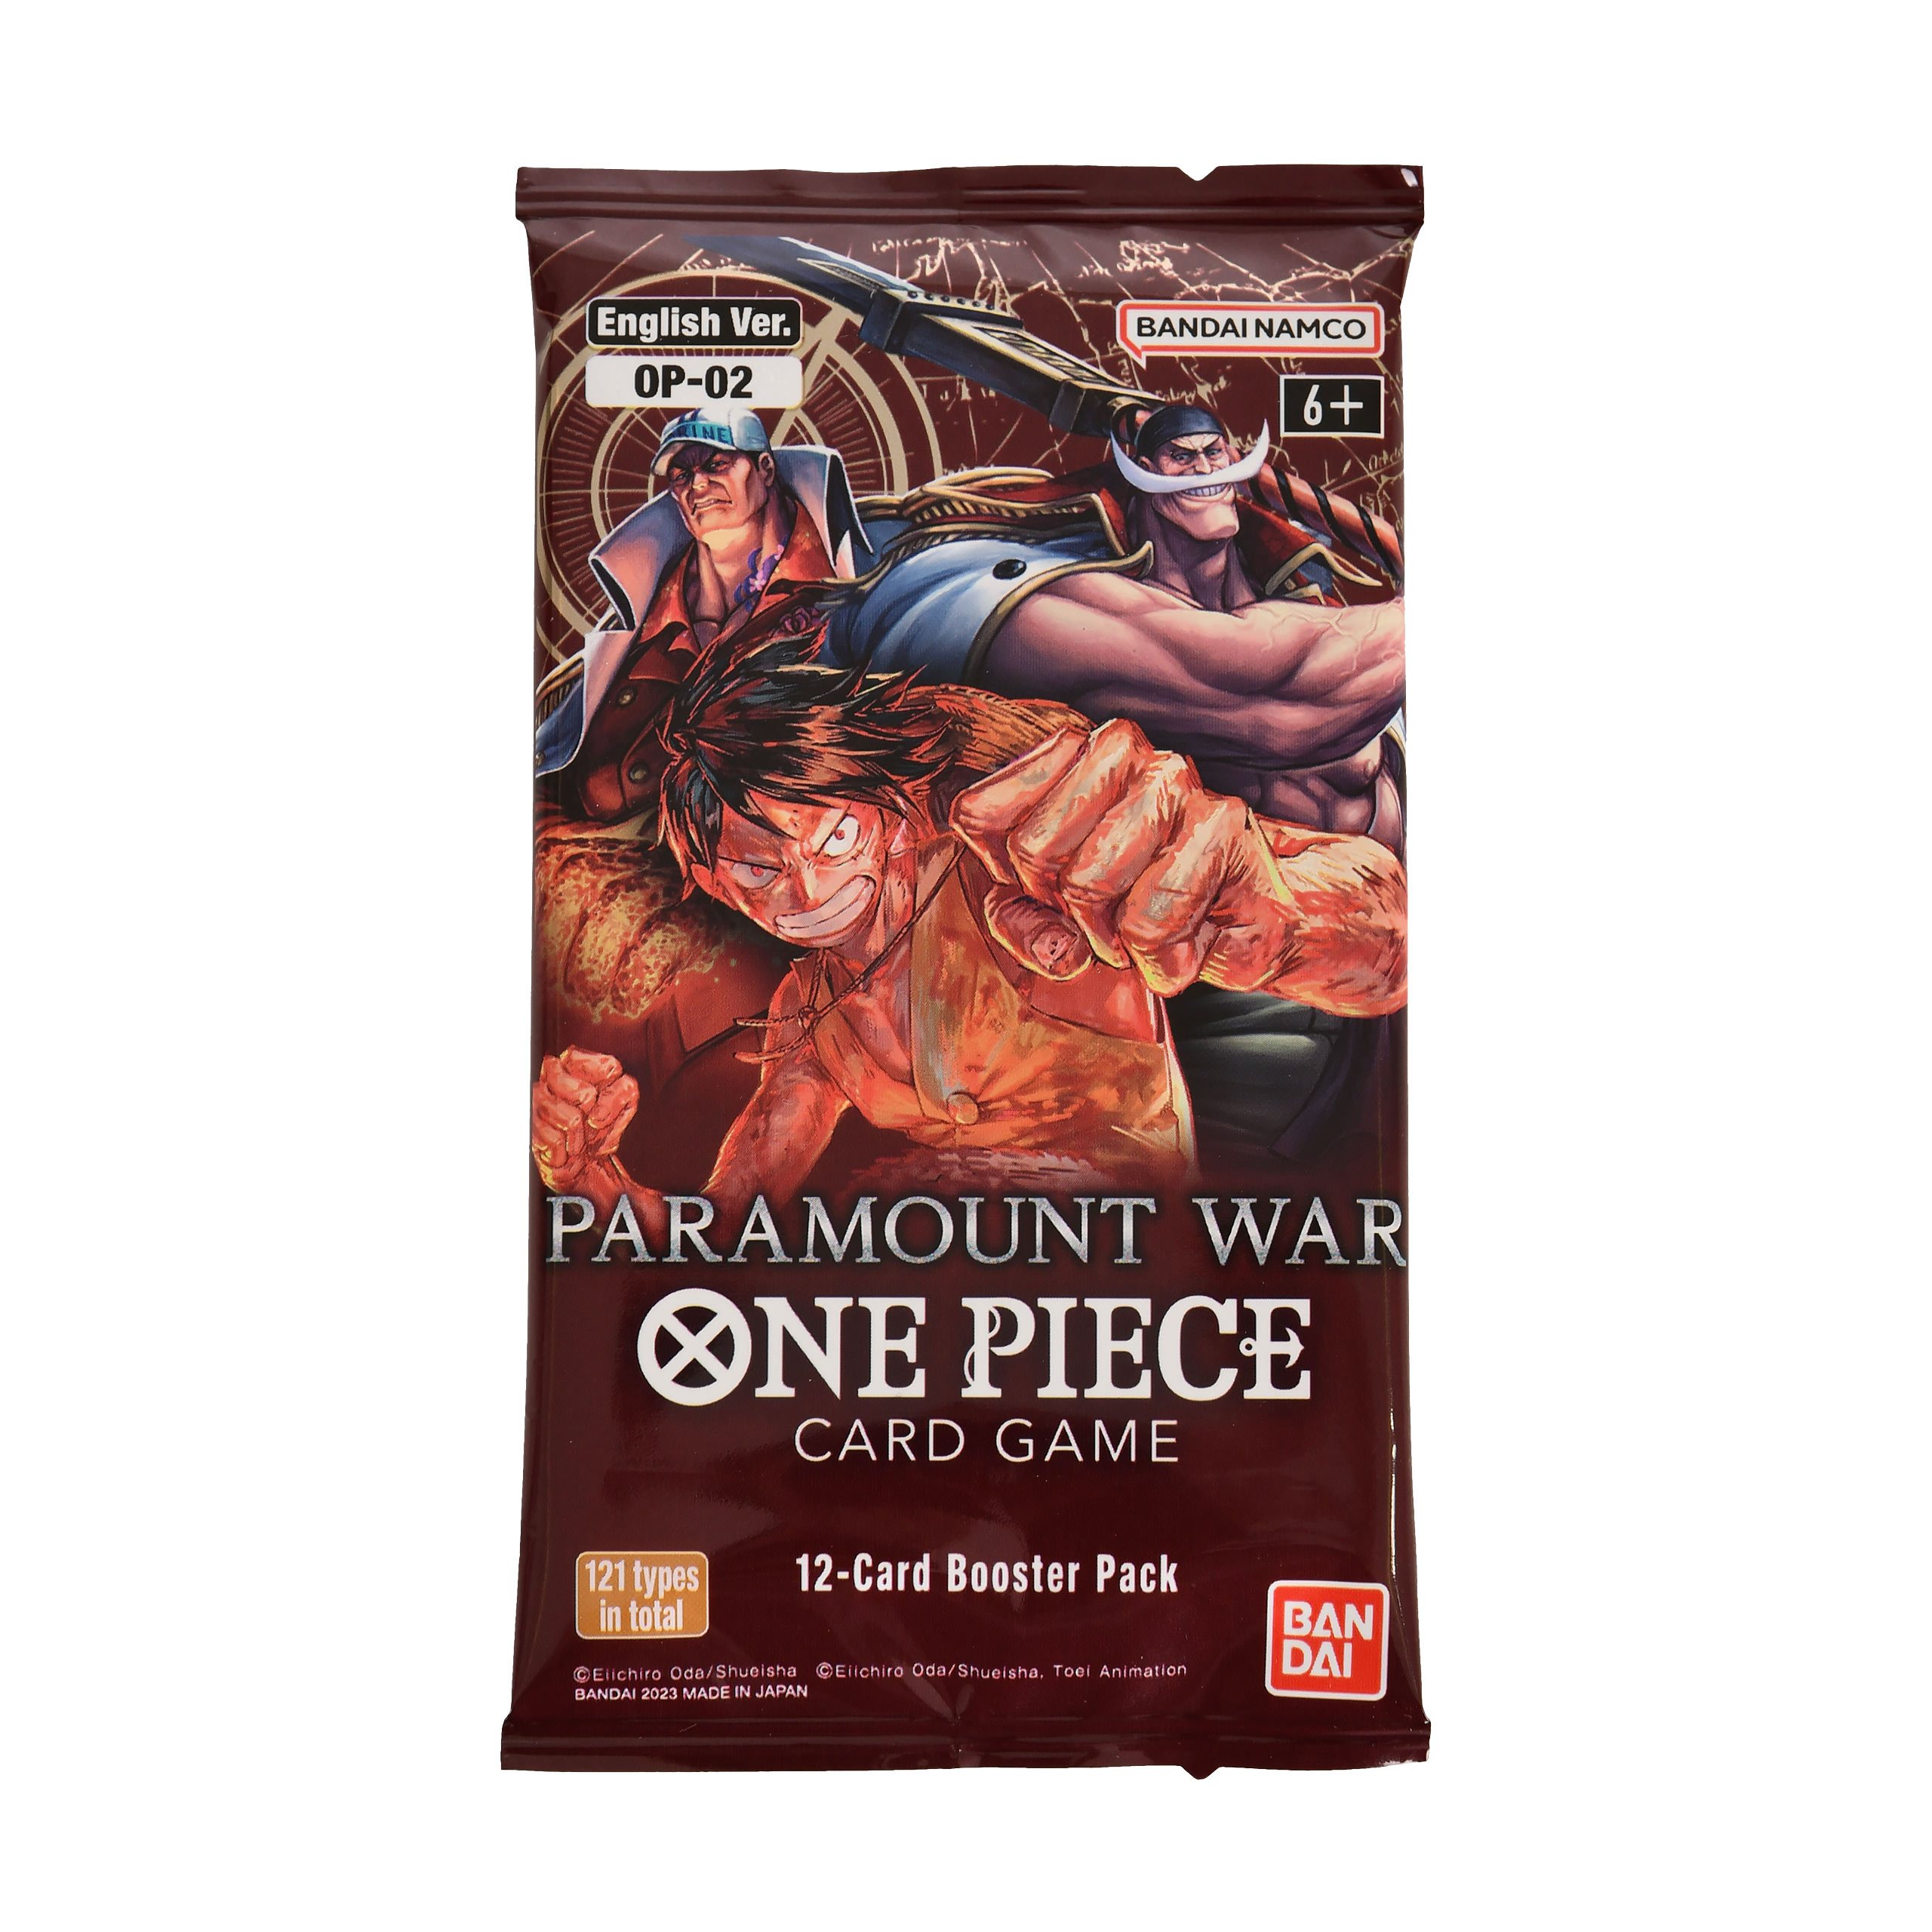 One Piece Card Game - Paramount War Booster